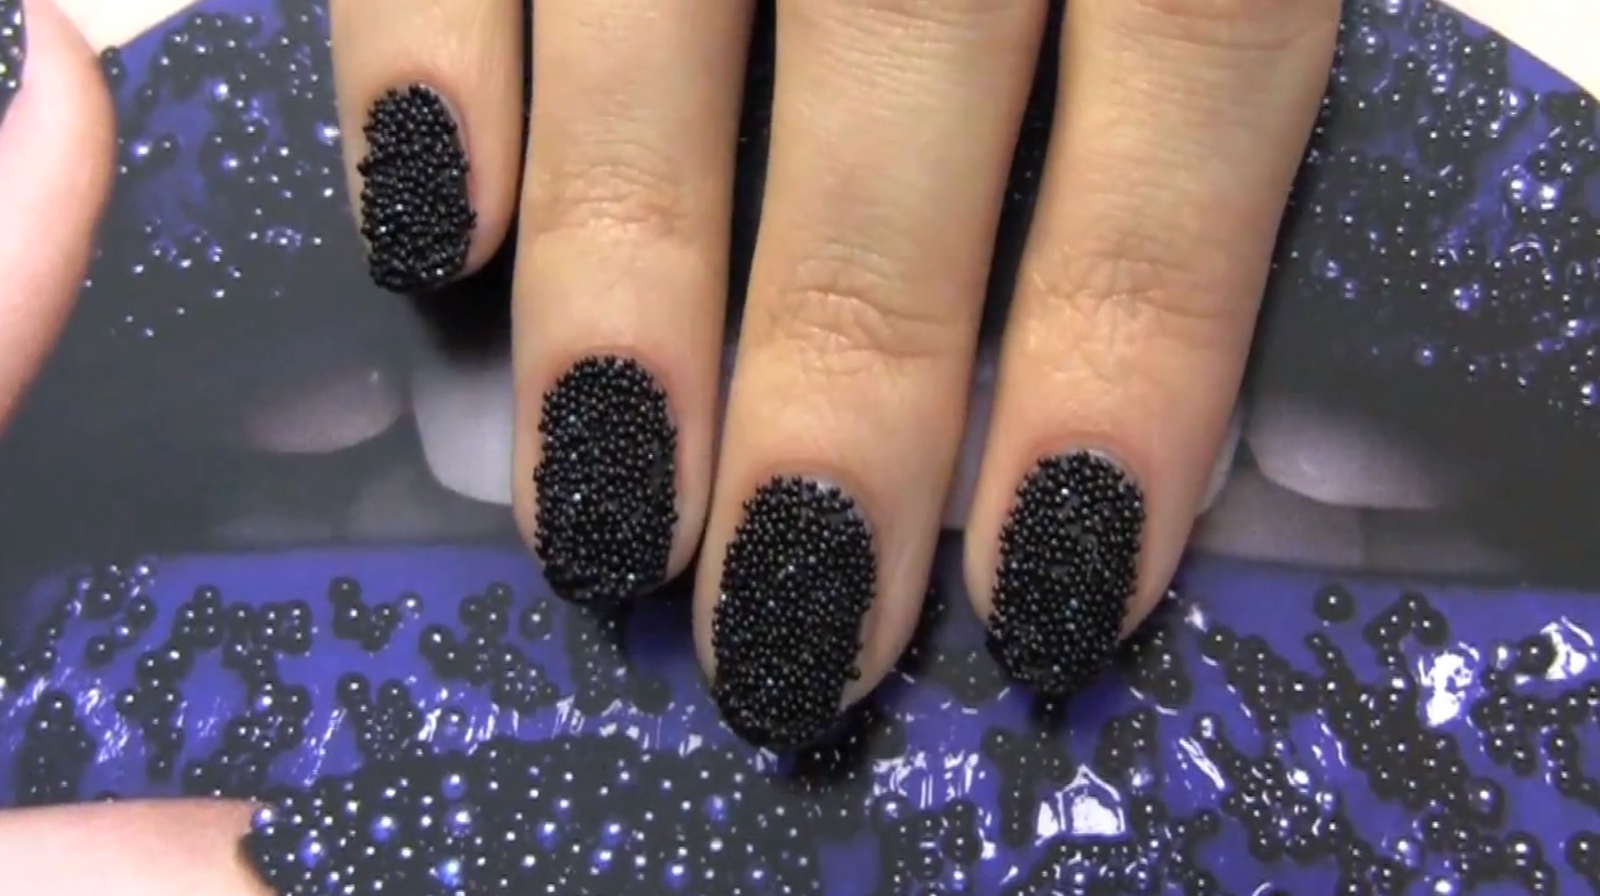 2. DIY Caviar Nails - wide 2